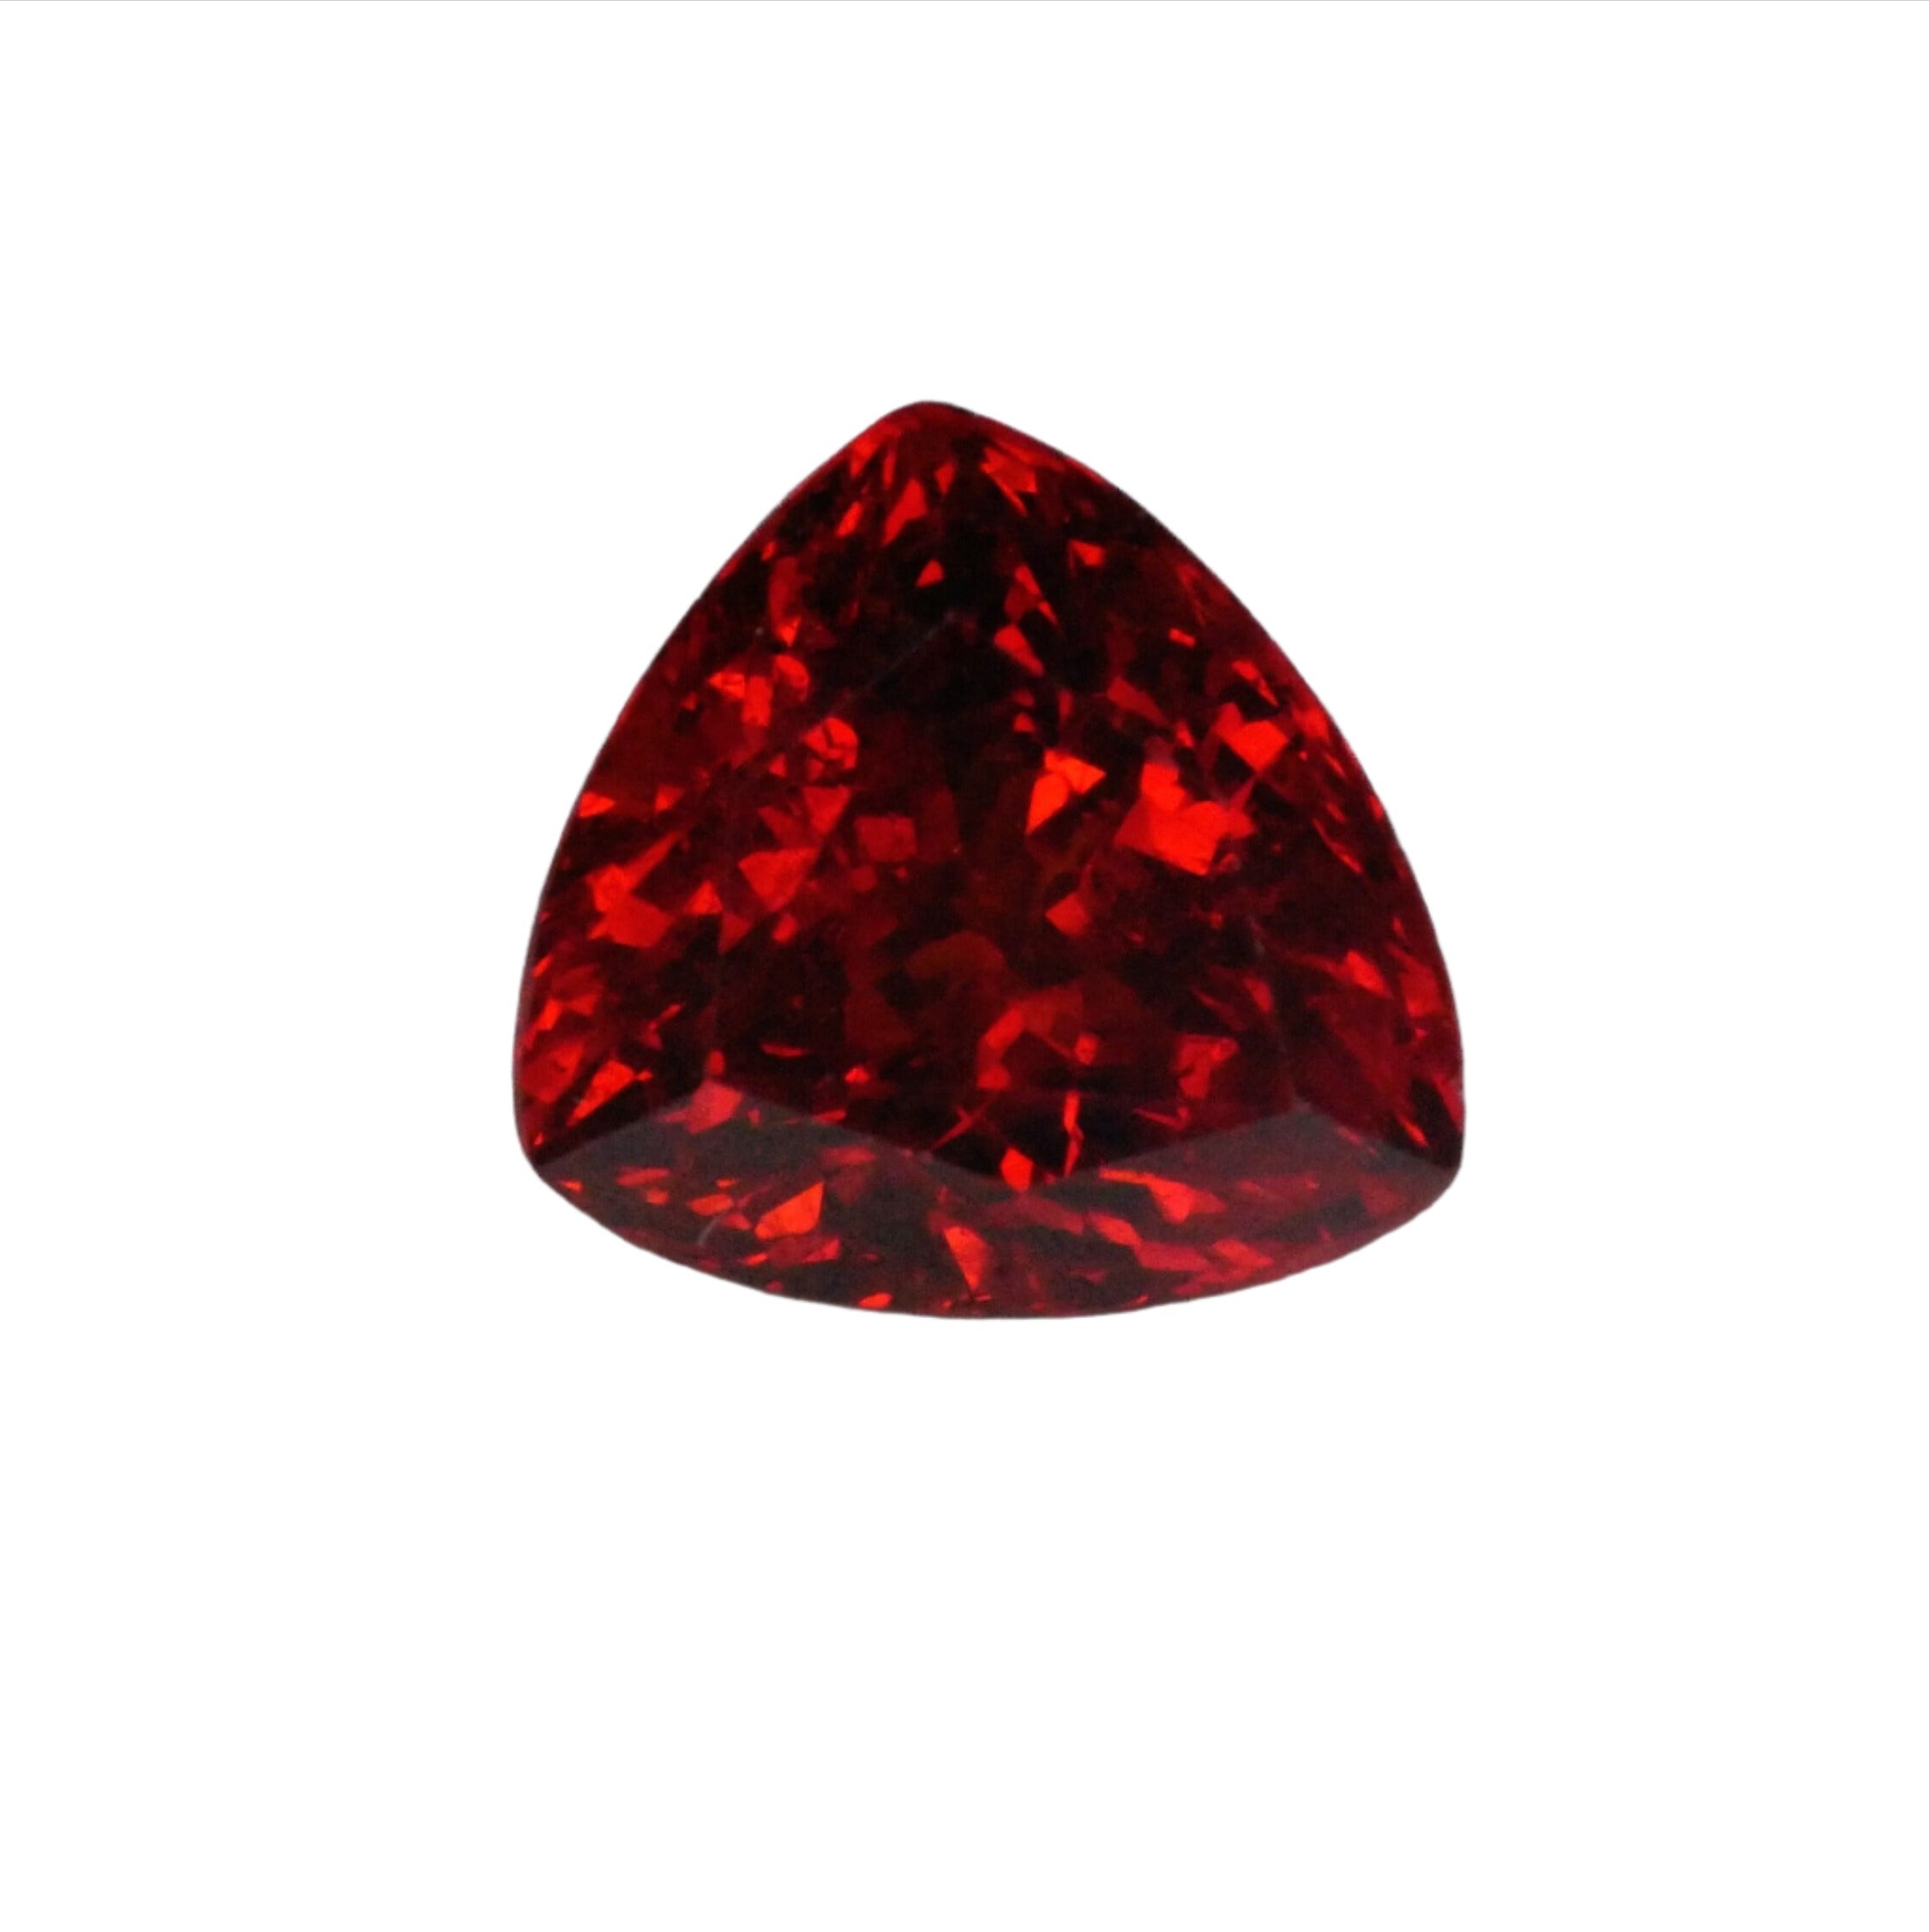 Gemstones-Vivid Slightly Reddish Orange Spessartine Garnet | Trillion 8x7x5mm | January Birthstone | 2 Carats | Untreated | Red Jewelry Center Stone - NNJGemstones